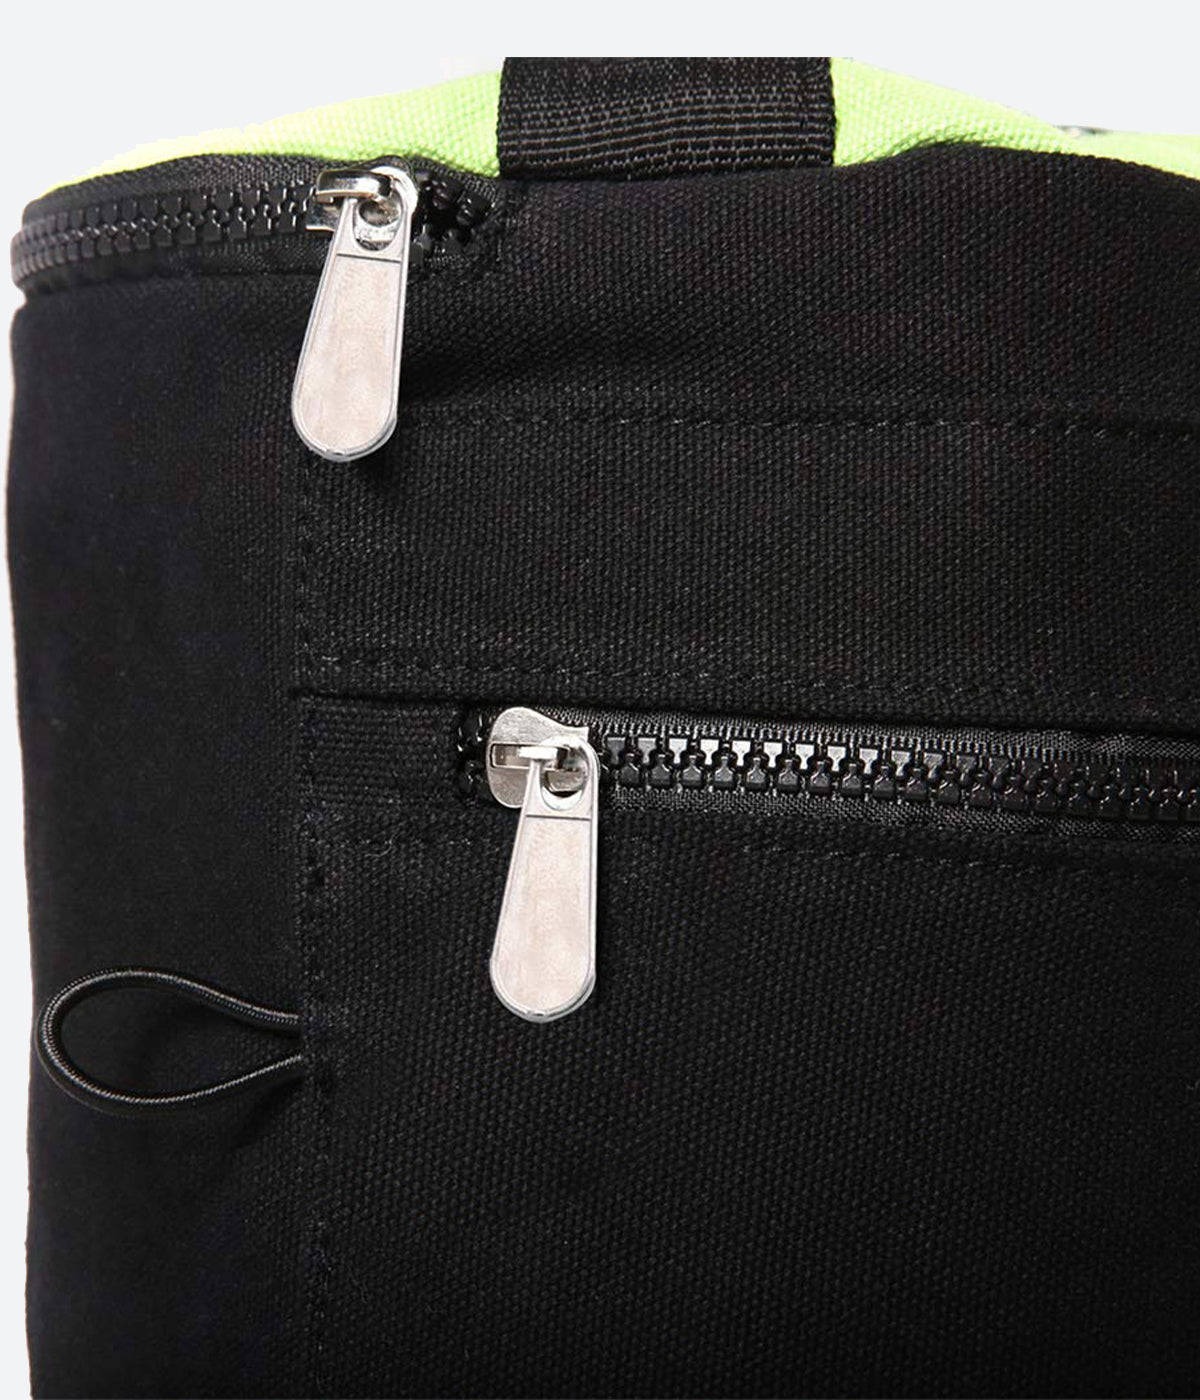 Heathyoga Yoga Mat Bag with Large Mat Carrier Pocket Gym Bag for Women  Multi-Functional Yoga Bag Workout Bag for Women Yoga Mat Carrier Gym Tote  Bag